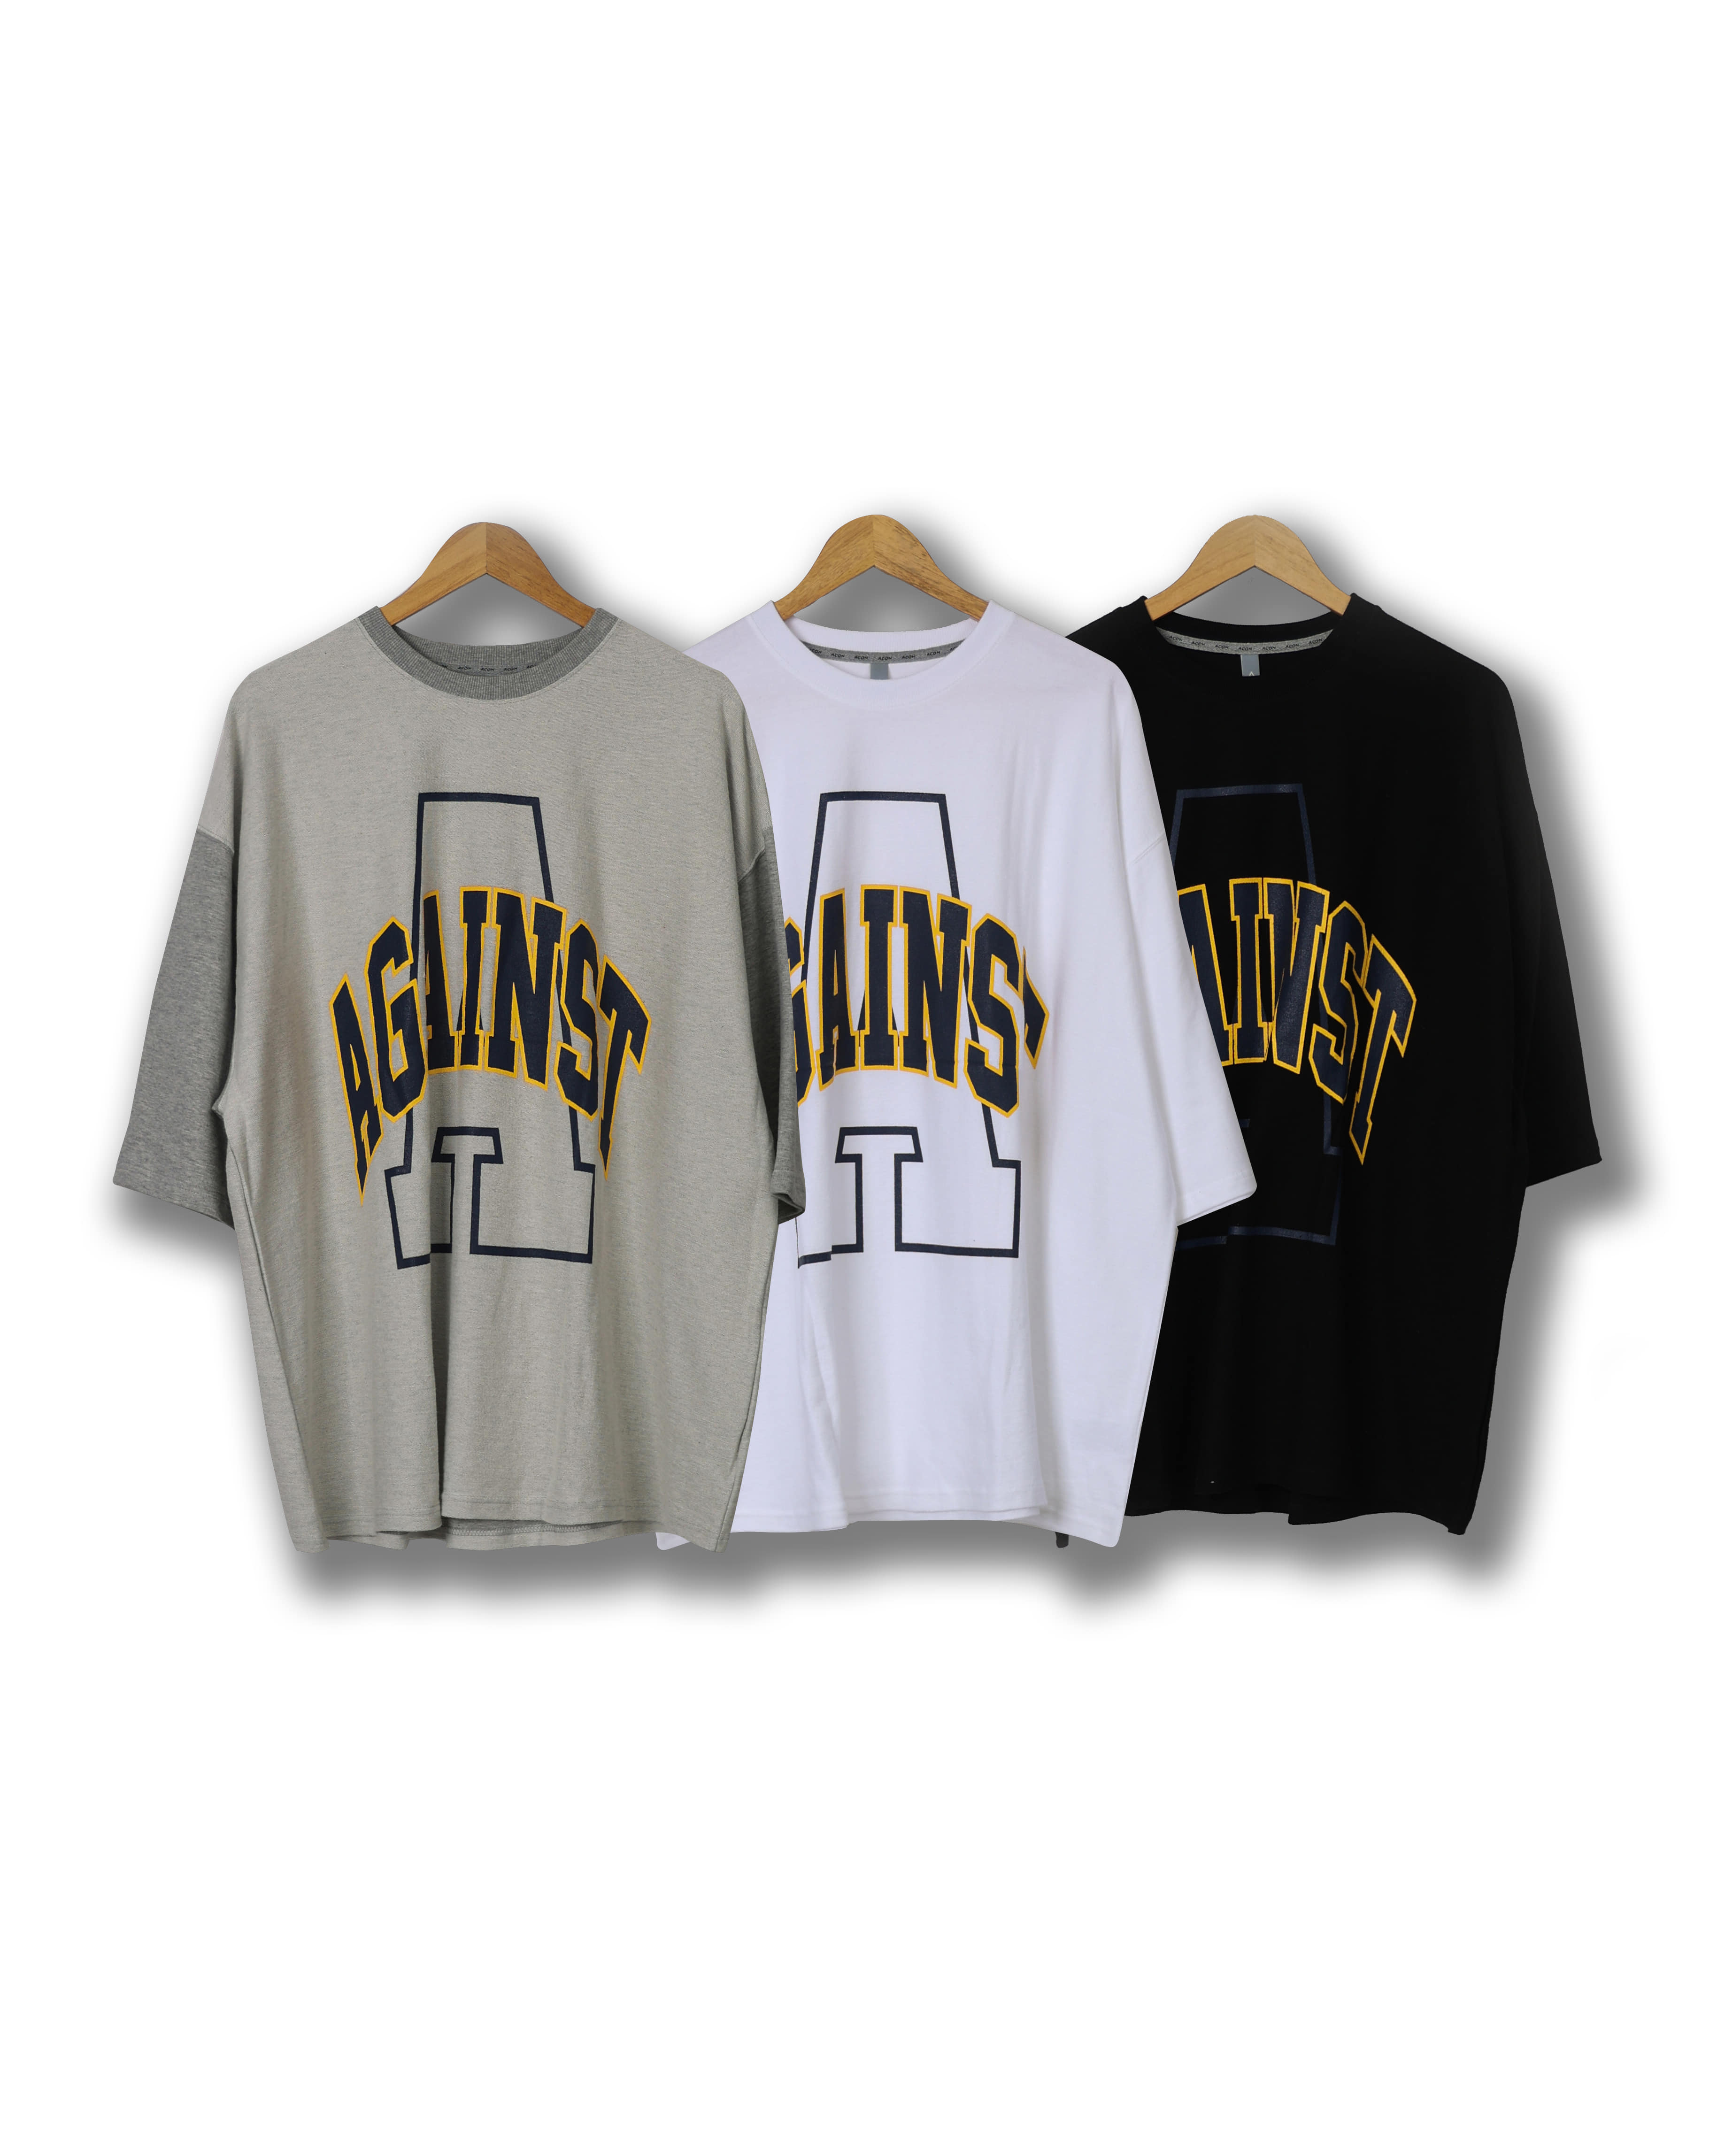 Reverse Light Sweat T-Shirts (Black/Gray/White)